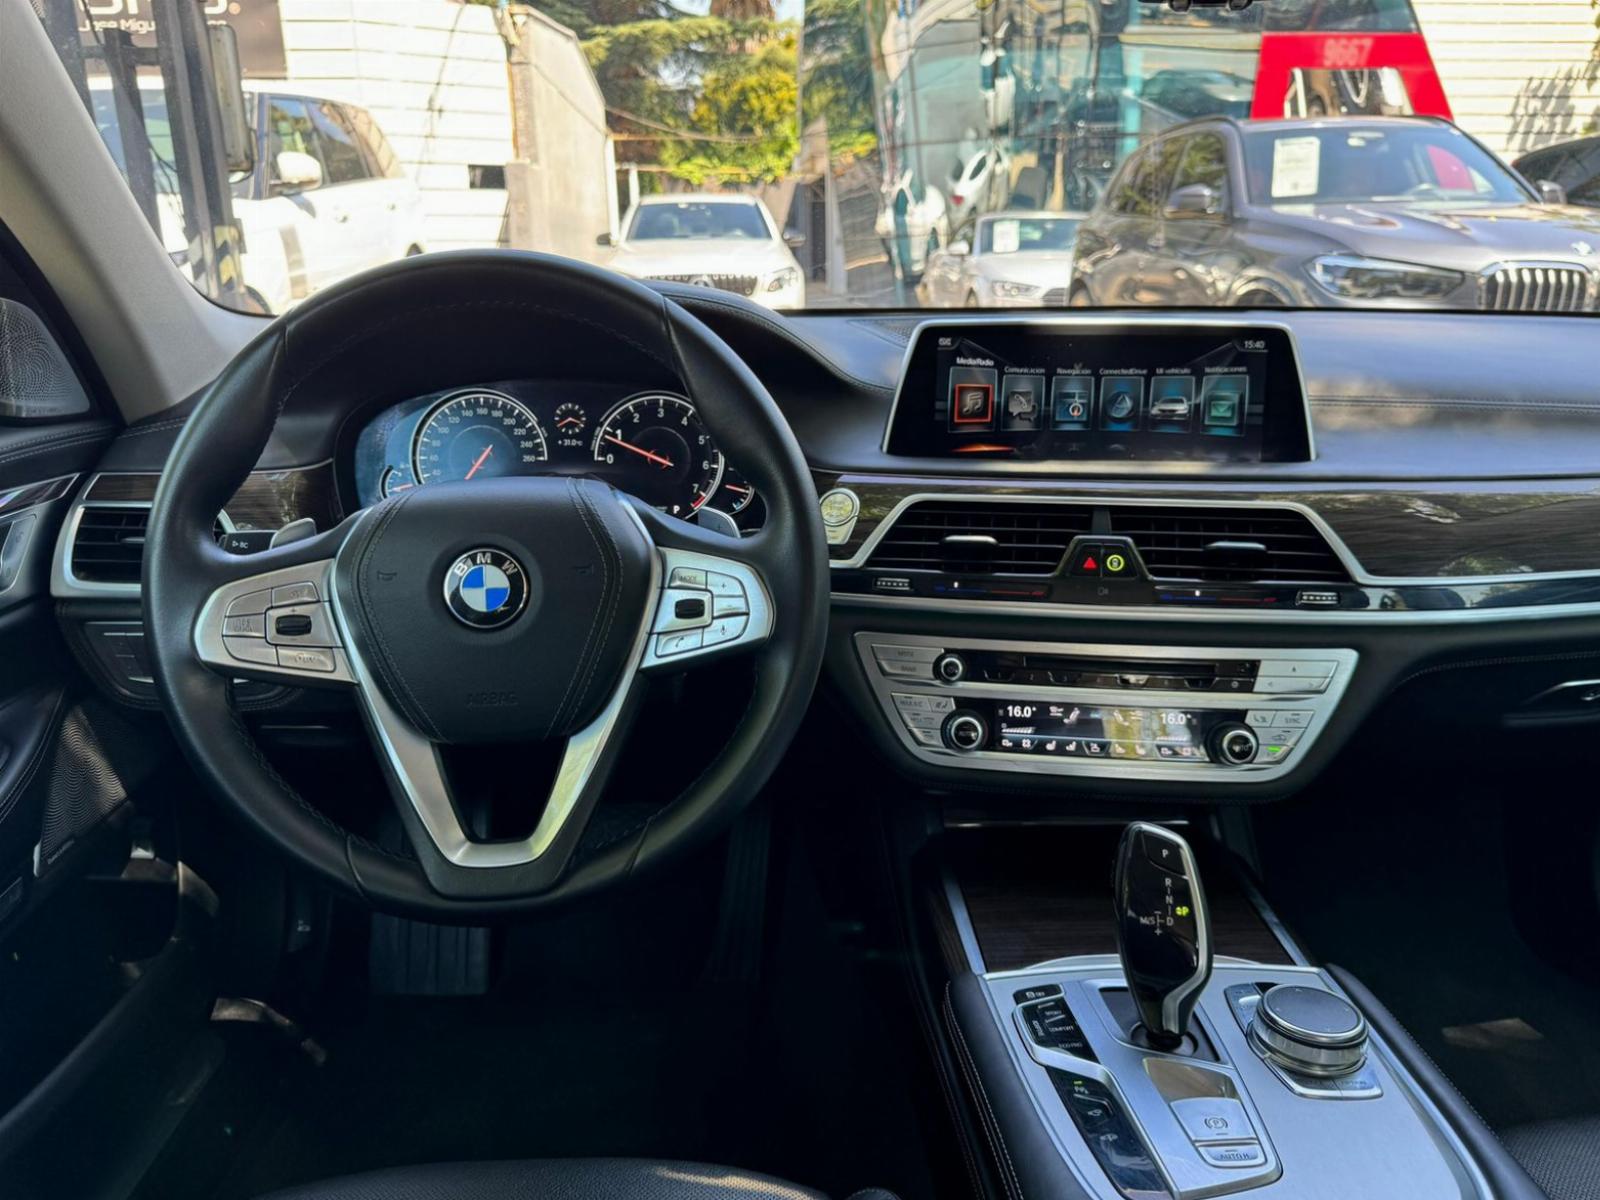 BMW 750 LI 4.4 2017 MANTENIMIENTO EN WBM - FULL MOTOR